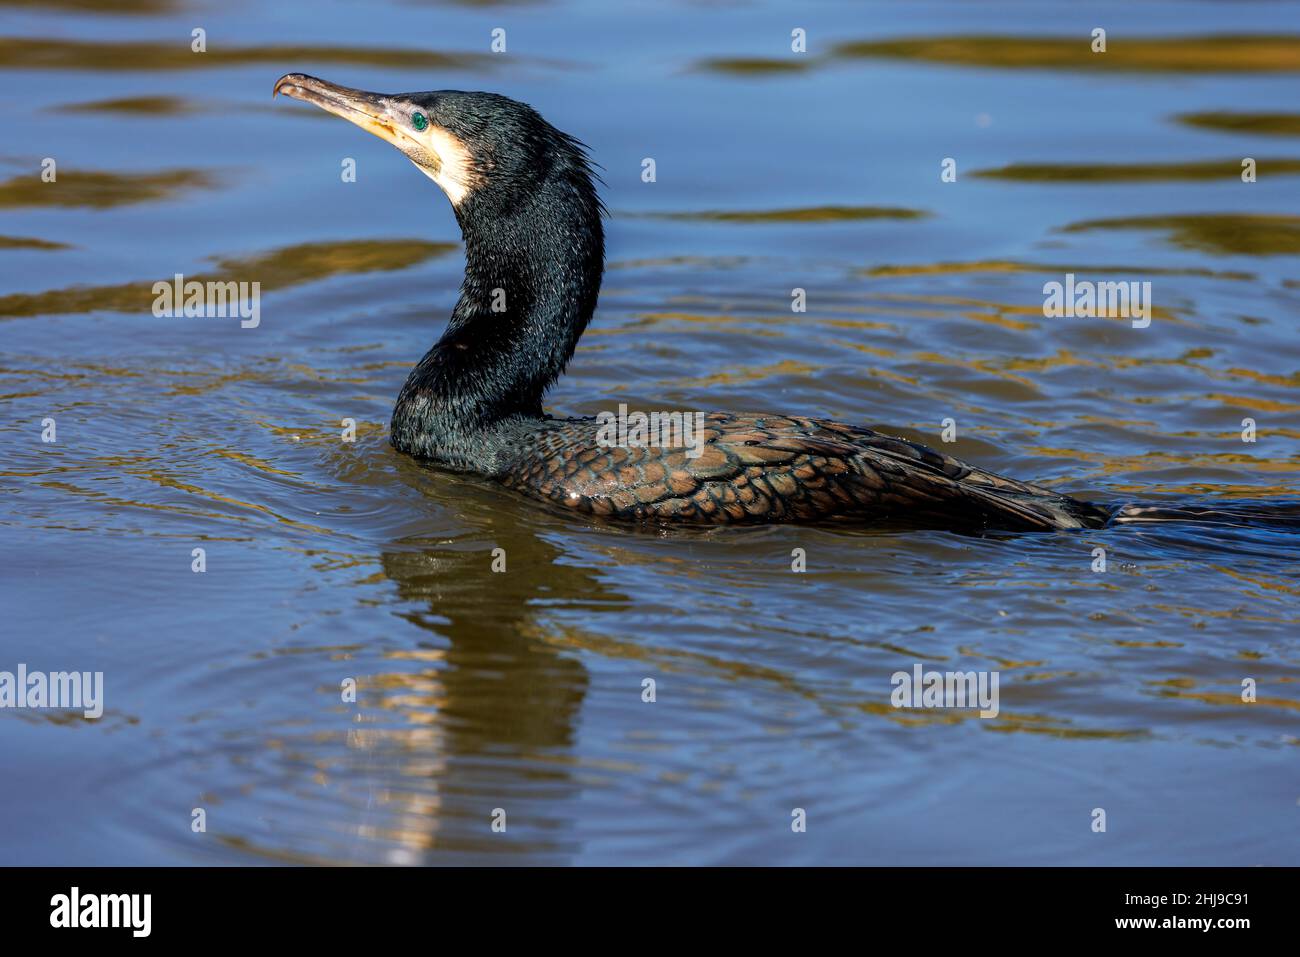 Cormorant swimming in calm water Stock Photo